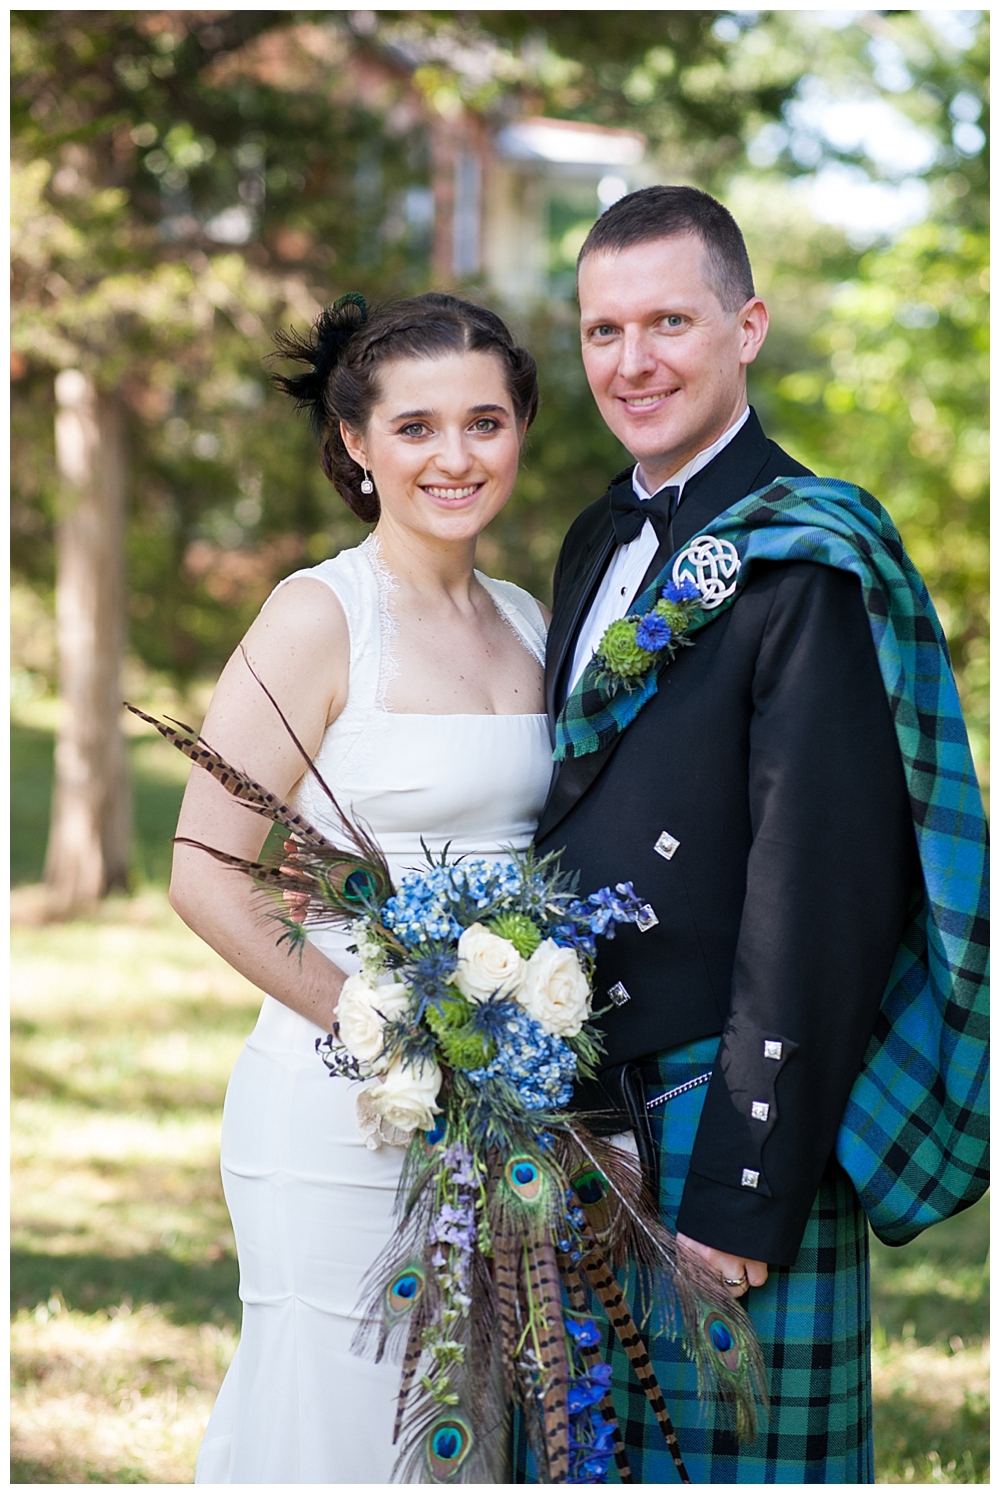 Bride and Groom Portrait in kilt